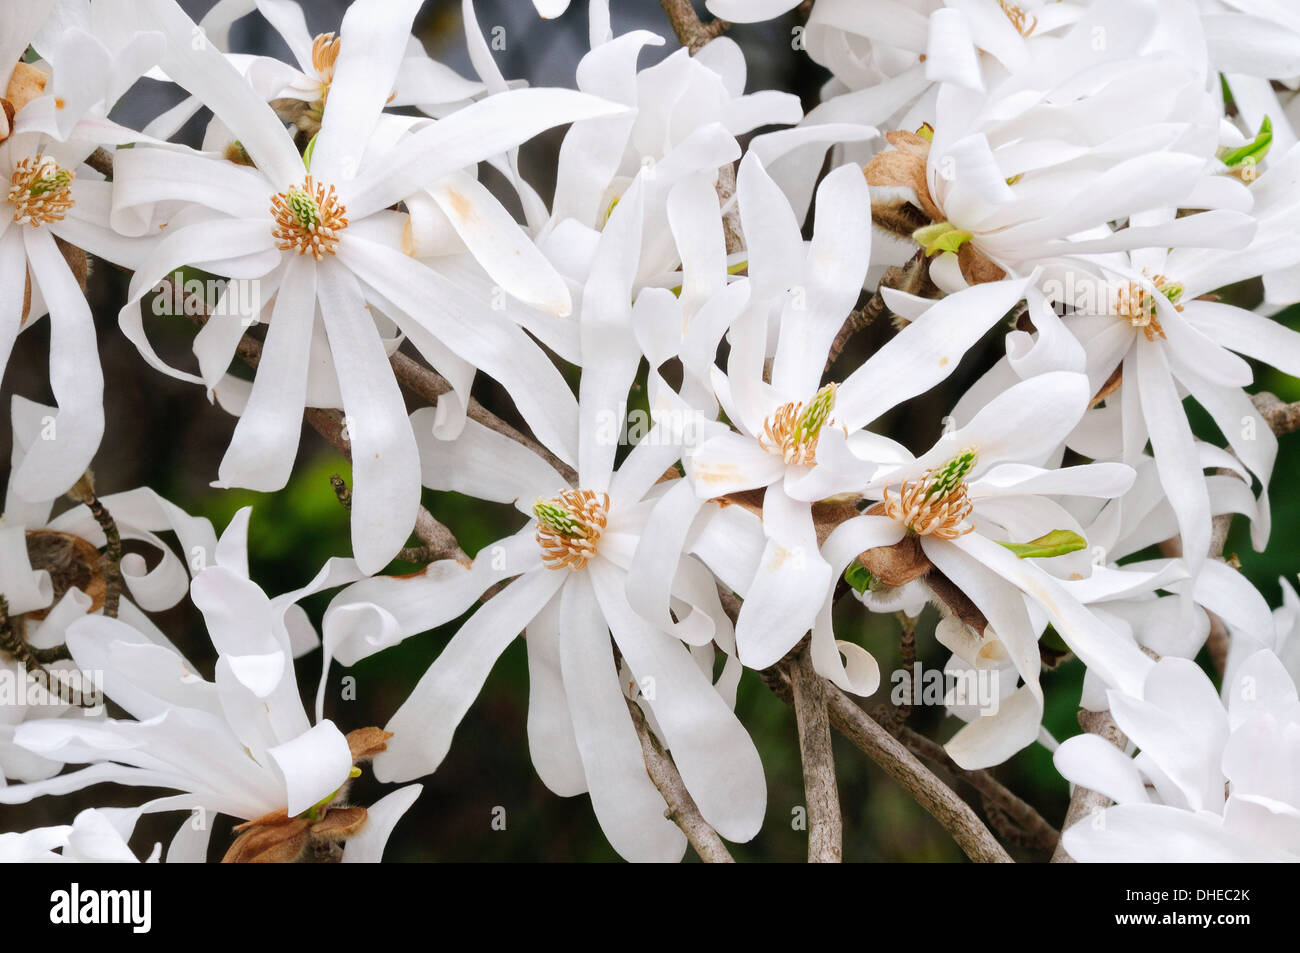 Star magnolia blossoms Stock Photo